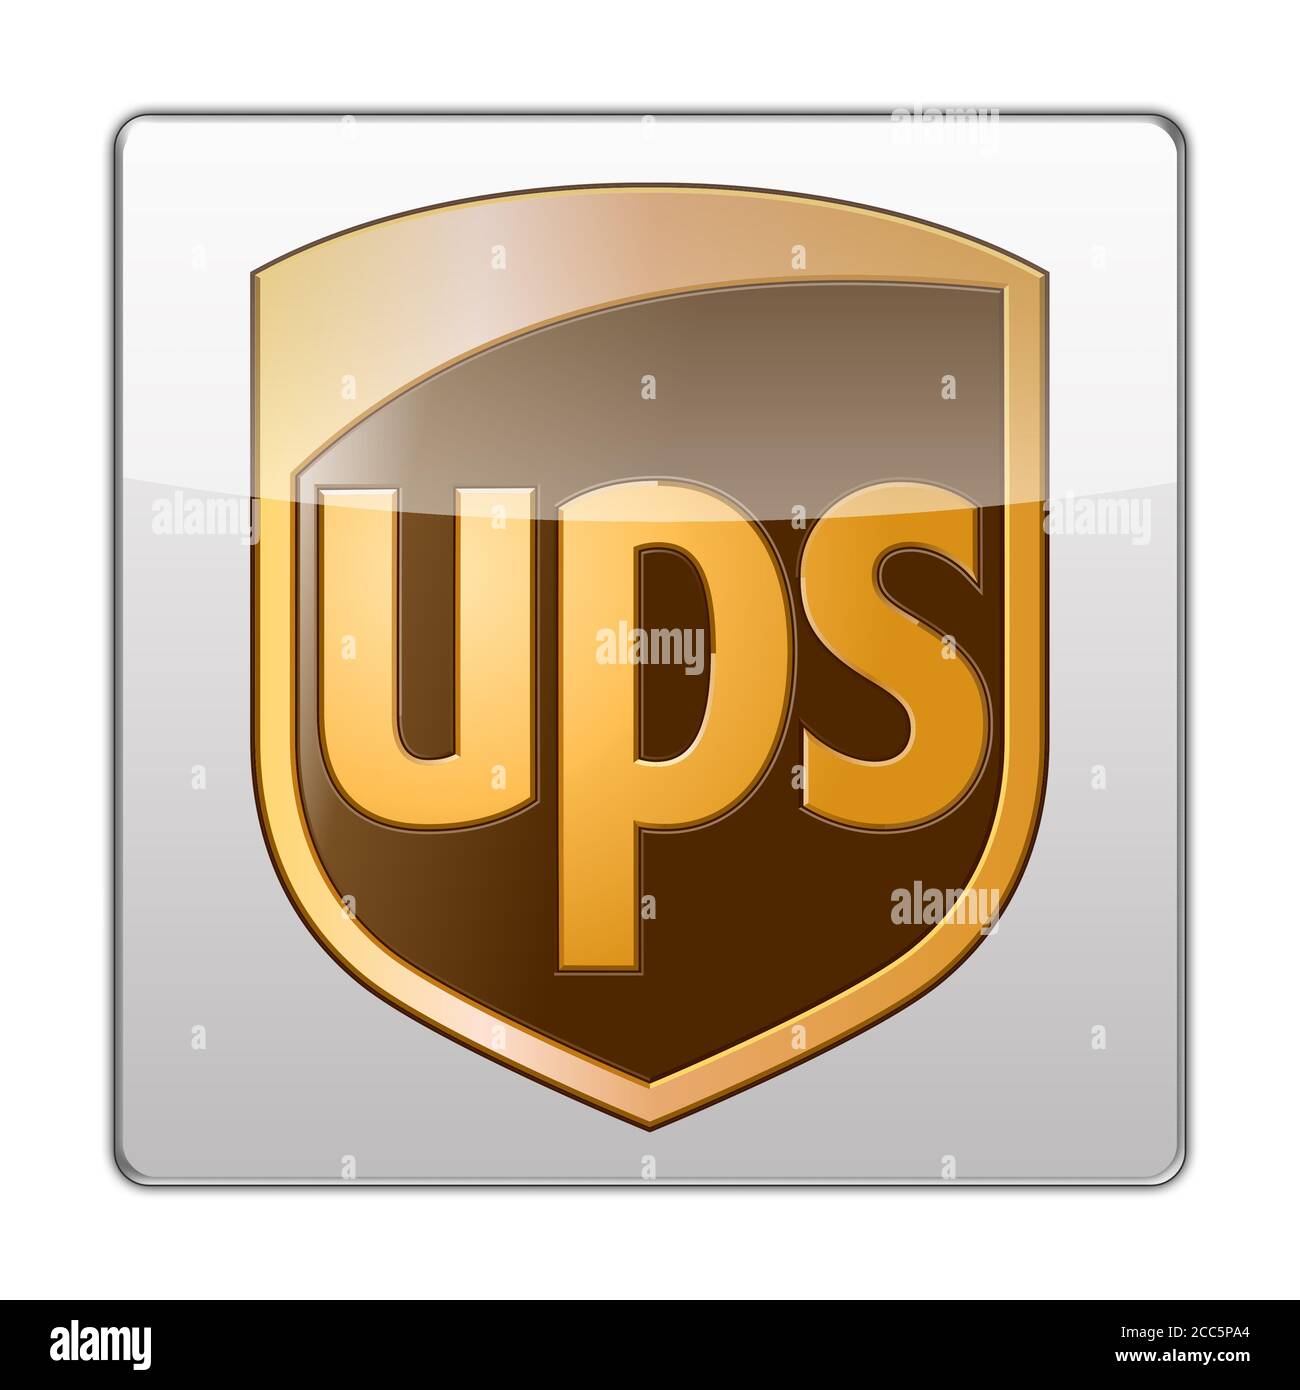 United Parcel Service Stockfoto